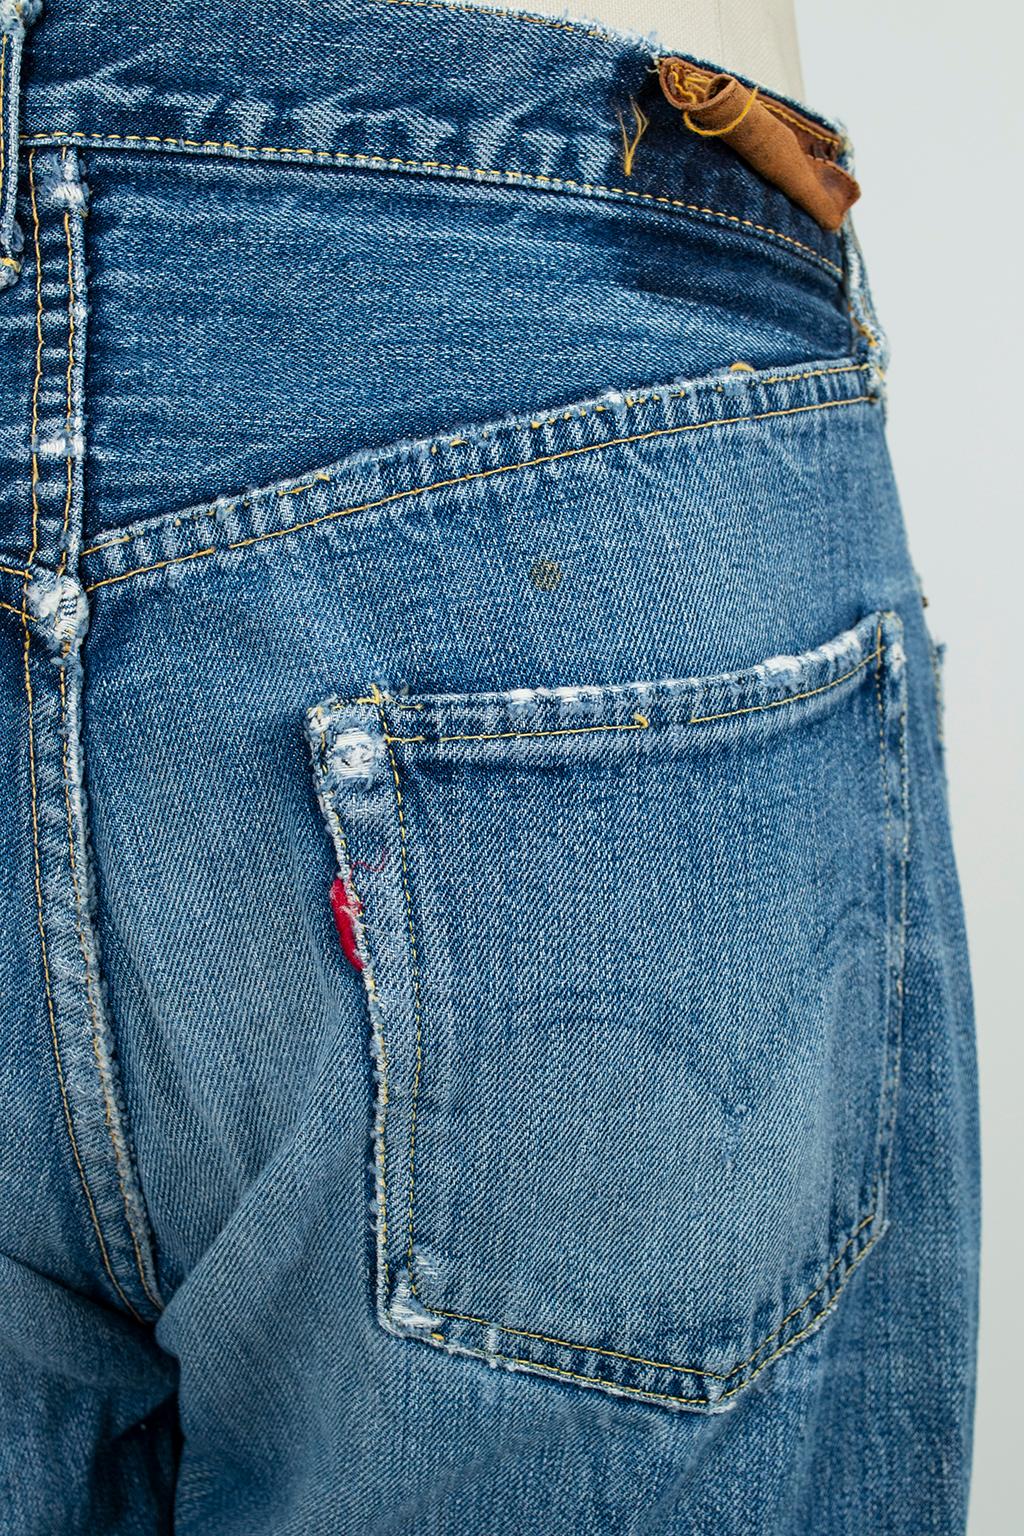 Men's Levi Strauss 501XX Denim Jeans with Hidden Rivets – size 32 x 38, 1962-64 3